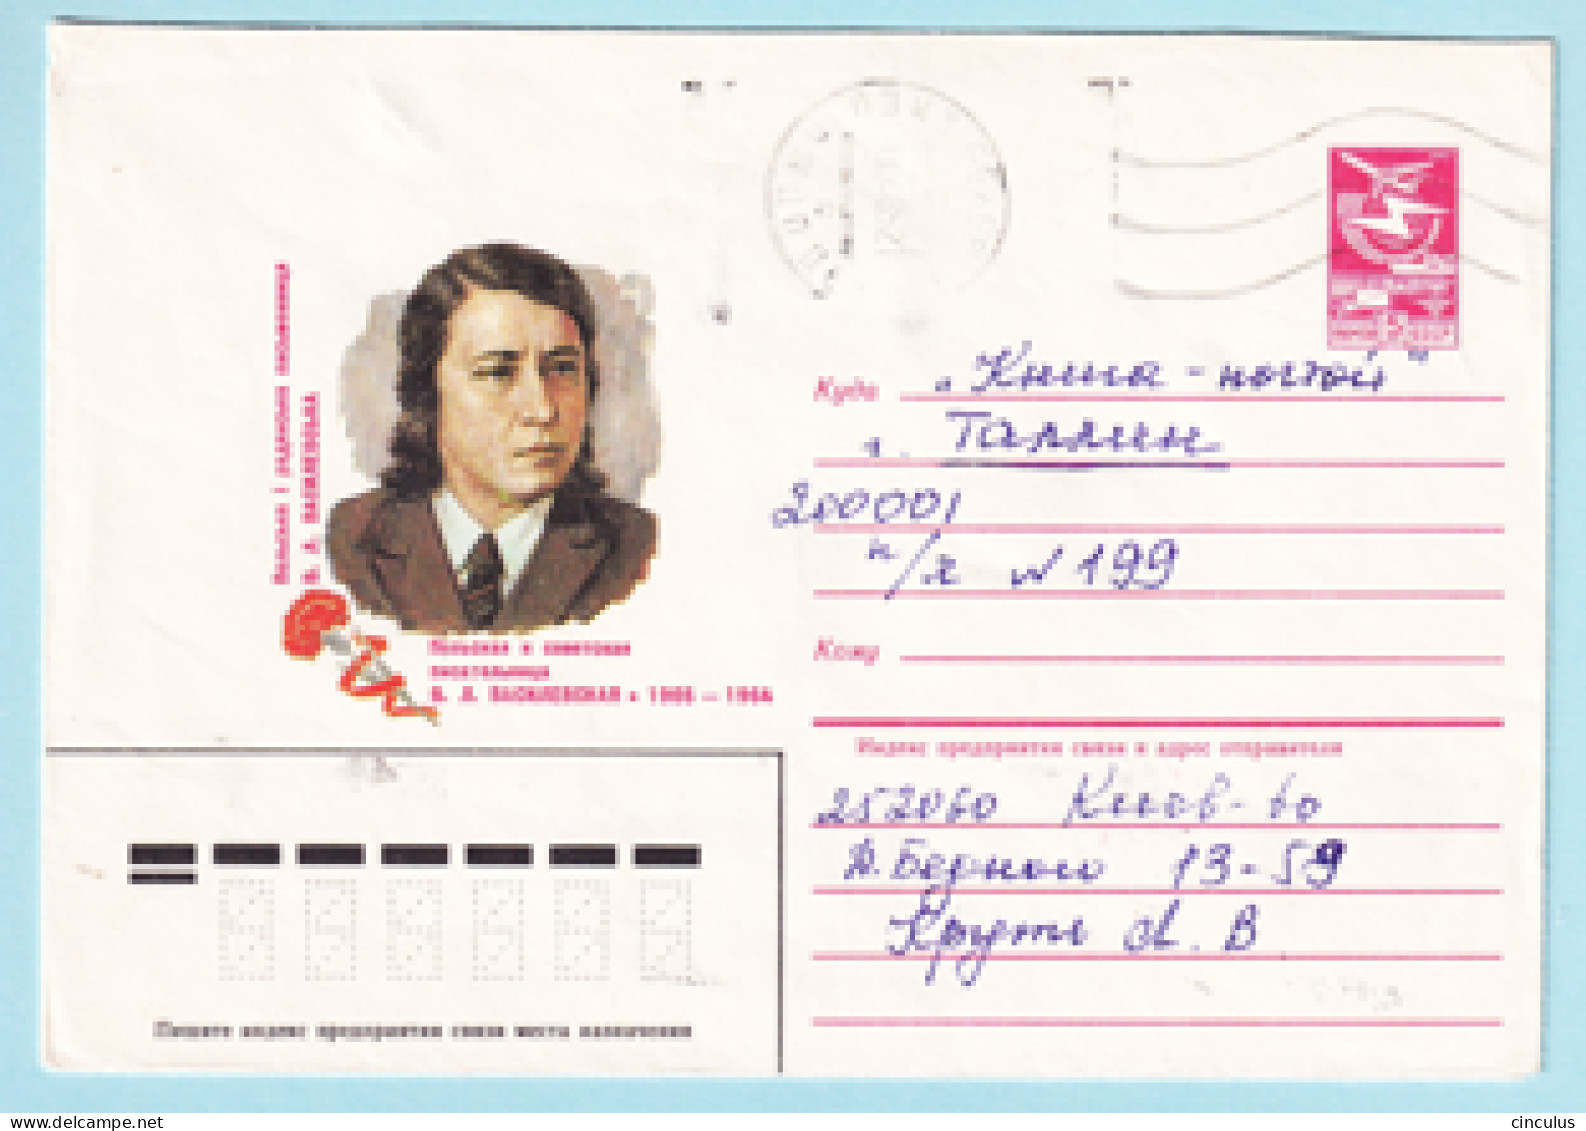 USSR 1984.1105. W.Wasilewska (1905-1964), Writer. Prestamped Cover, Used - 1980-91